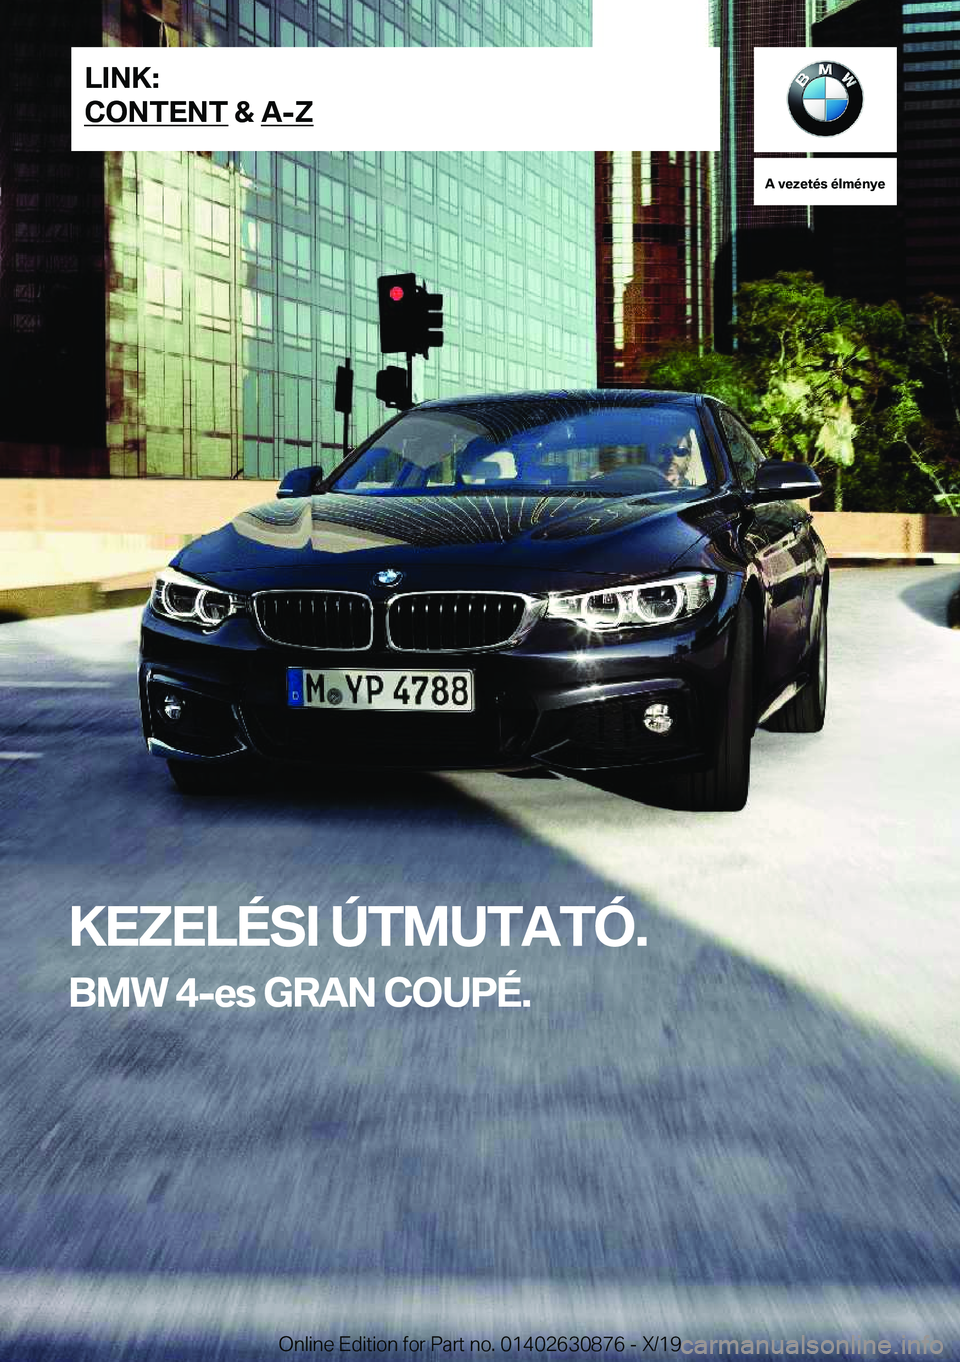 BMW 4 SERIES GRAN COUPE 2020  Kezelési útmutató (in Hungarian) �A��v�e�z�e�t�